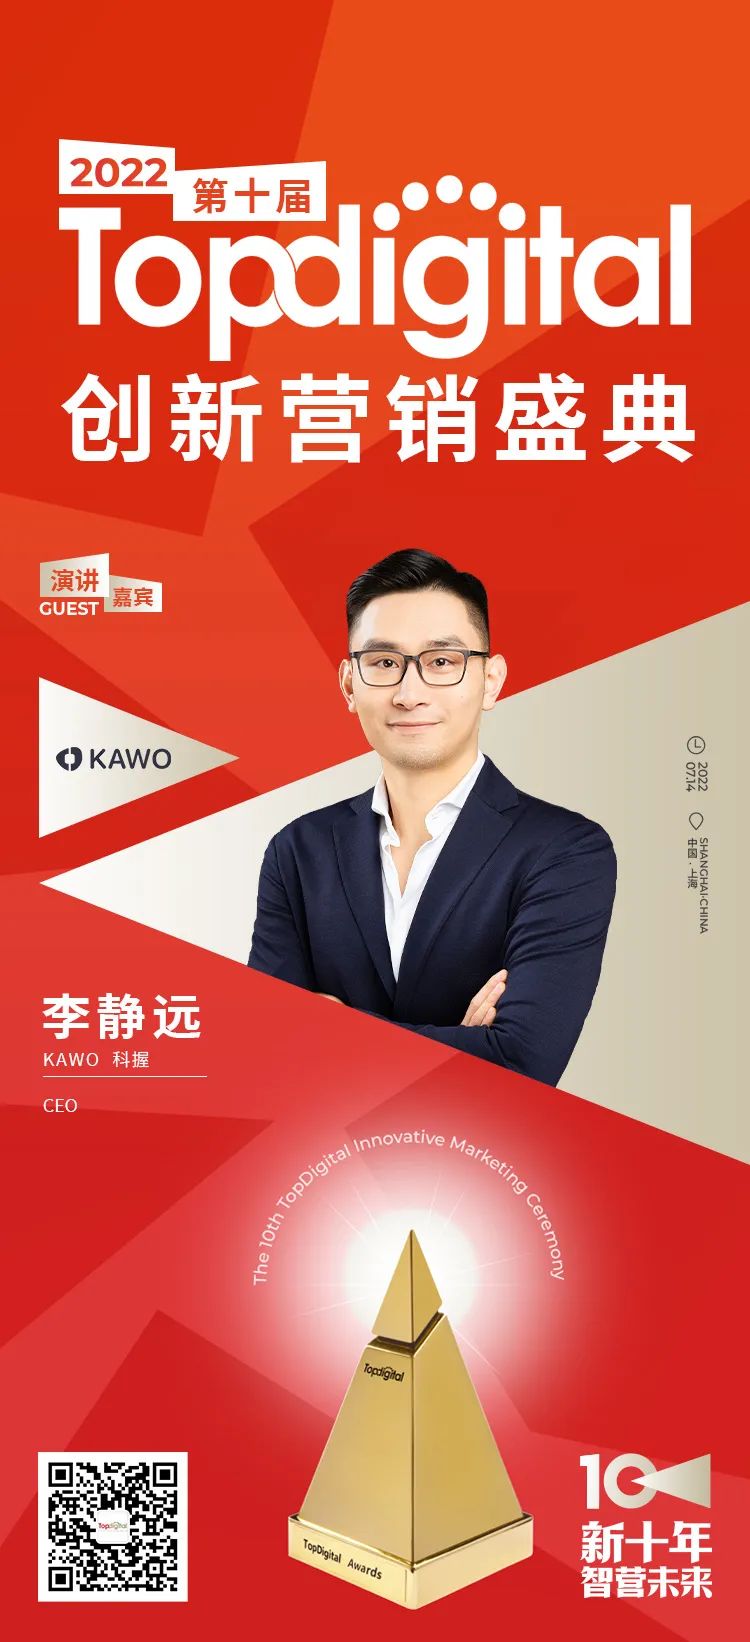 KAWO公司CEO李静远确认出席并发表主题演讲 